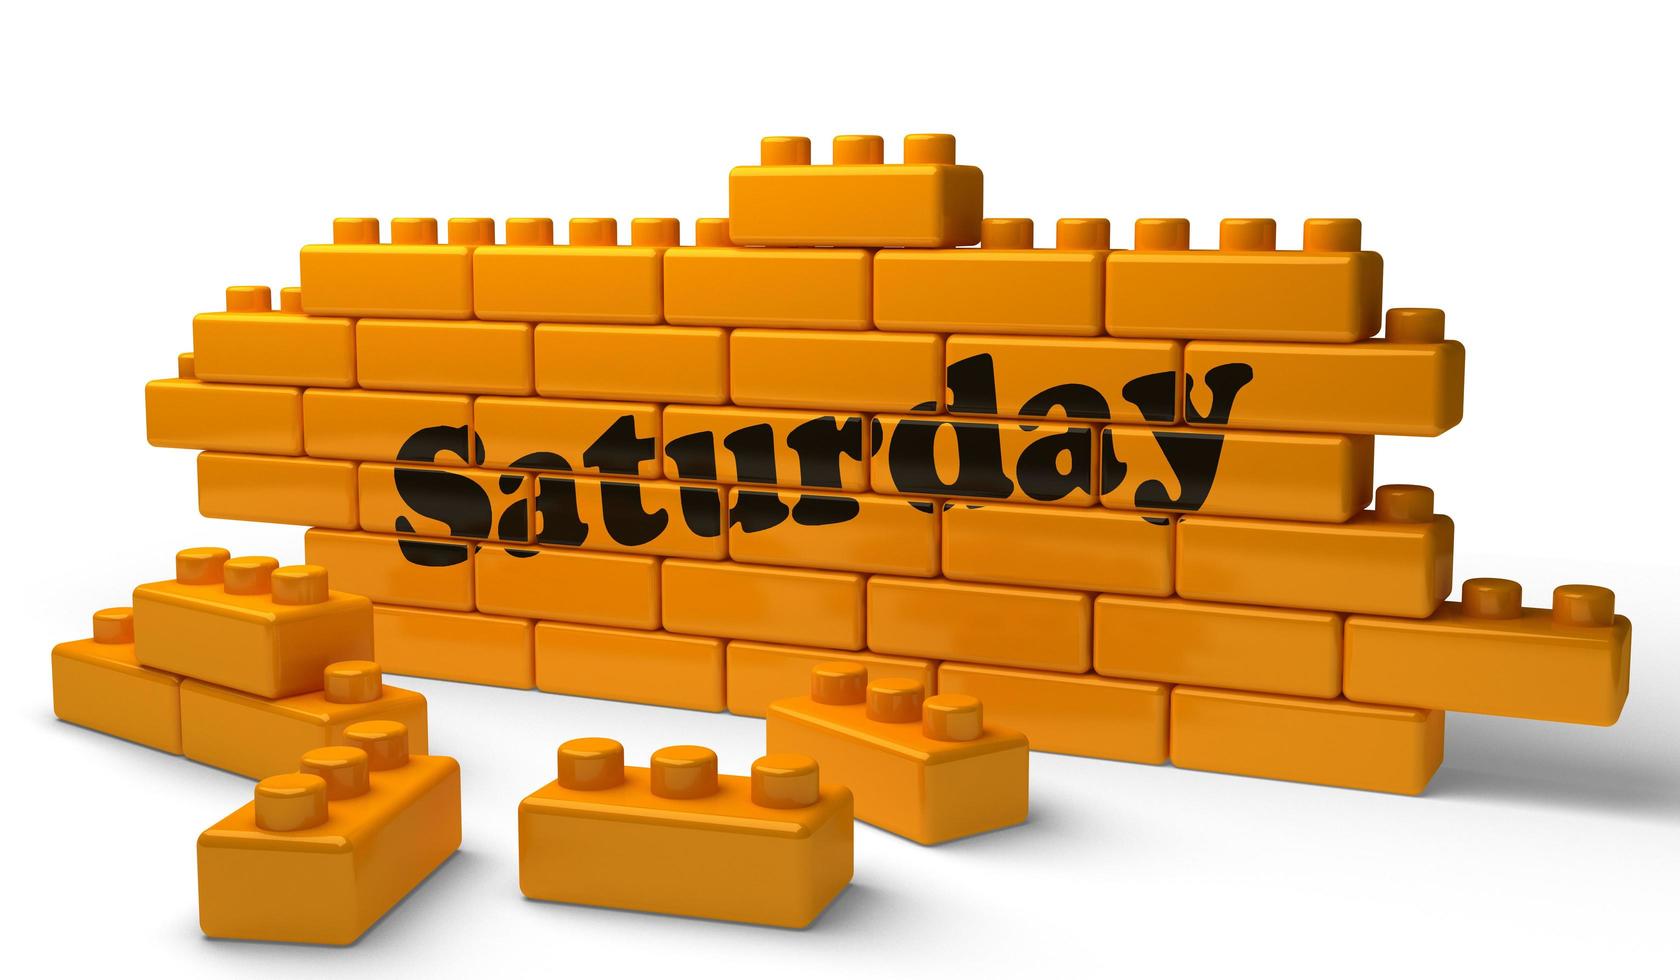 Saturday word on yellow brick wall photo